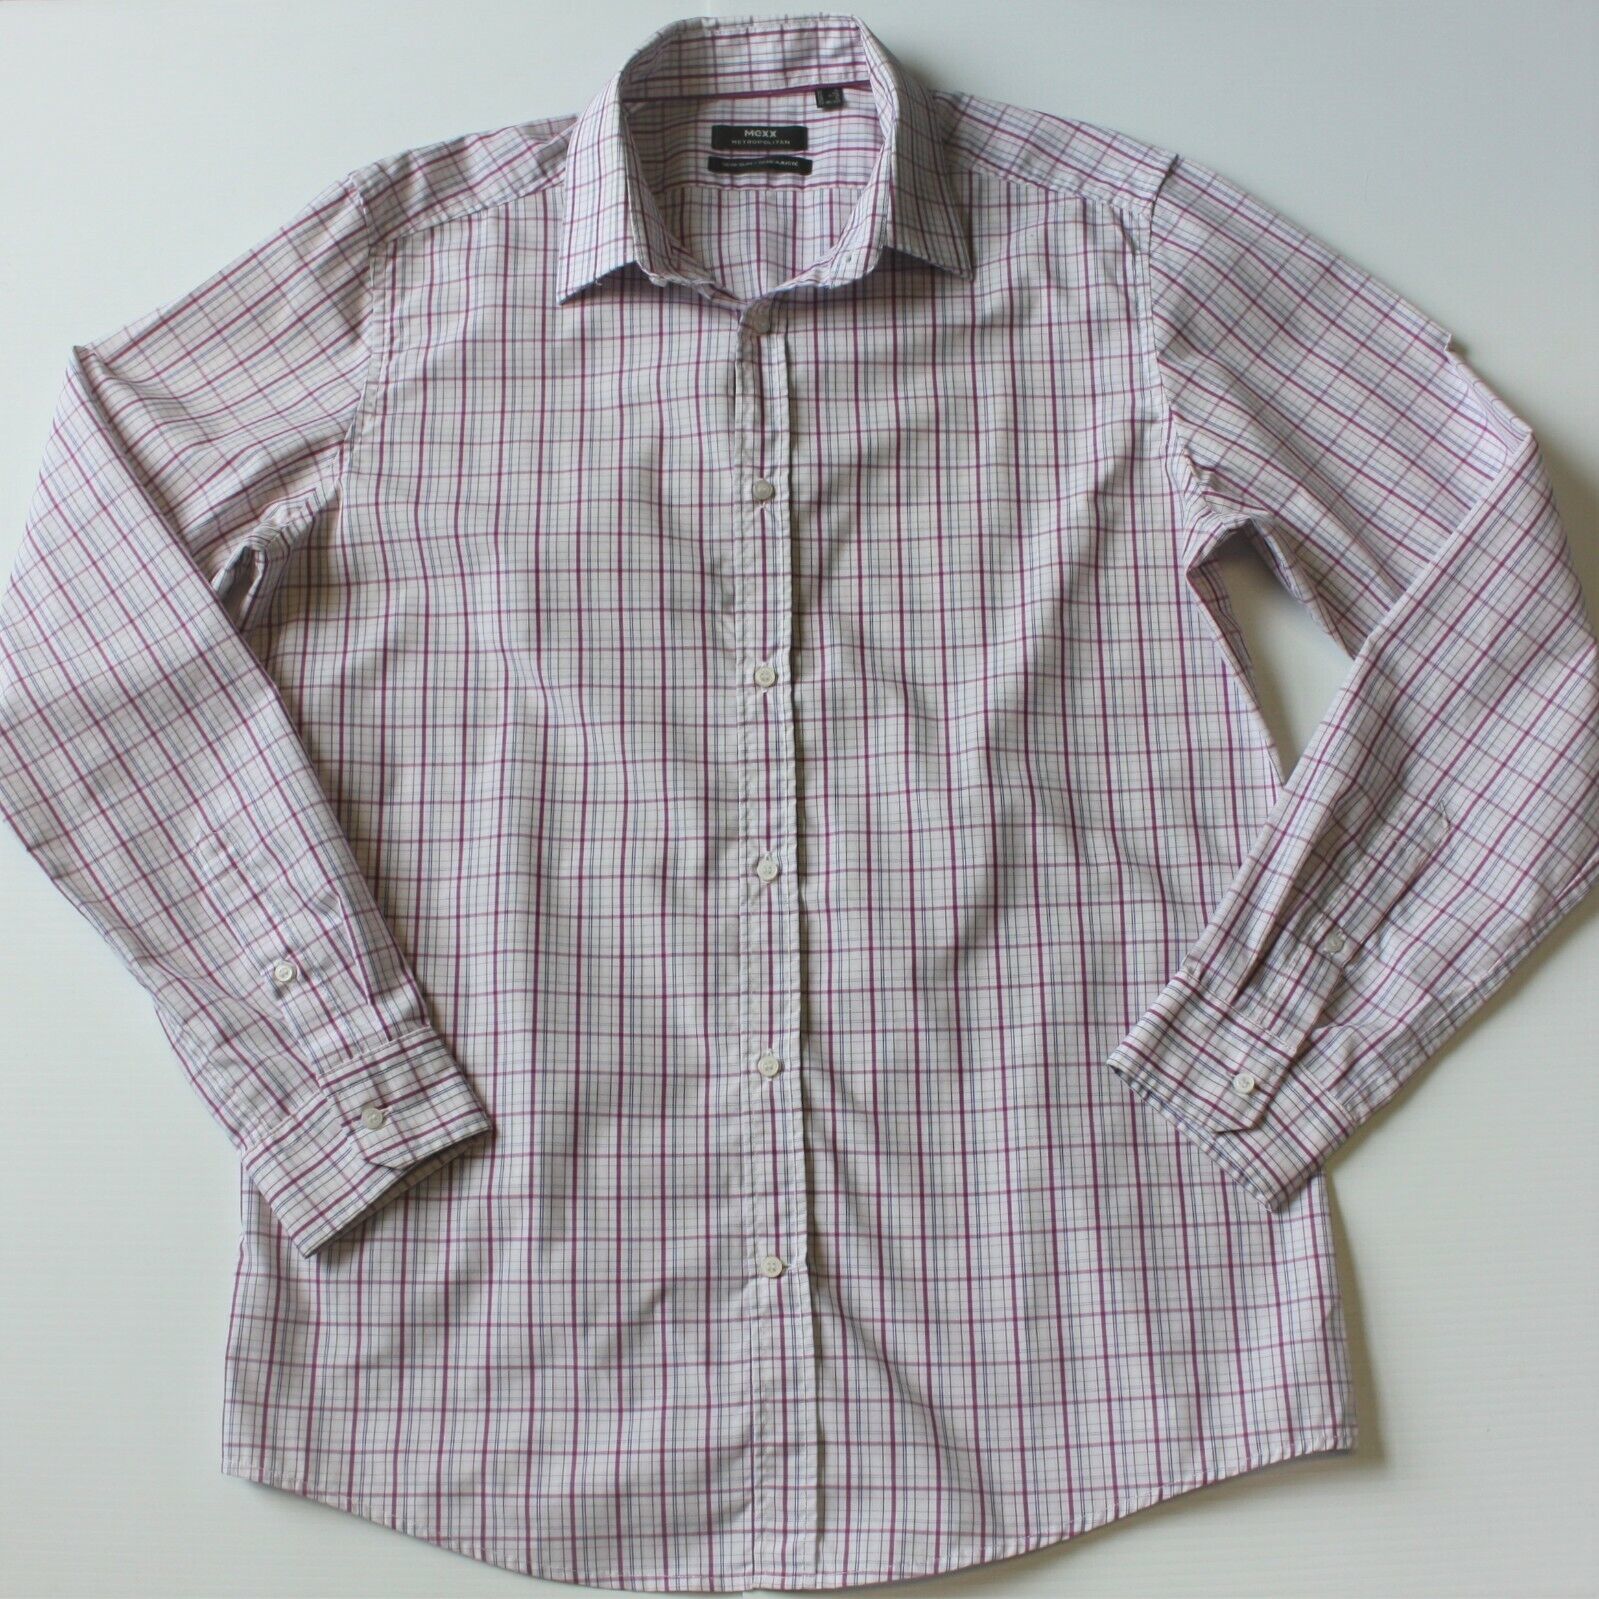 Primary image for Mexx Metropolitan Slim Fit Men's Checkered Print Dress Shirt size XL